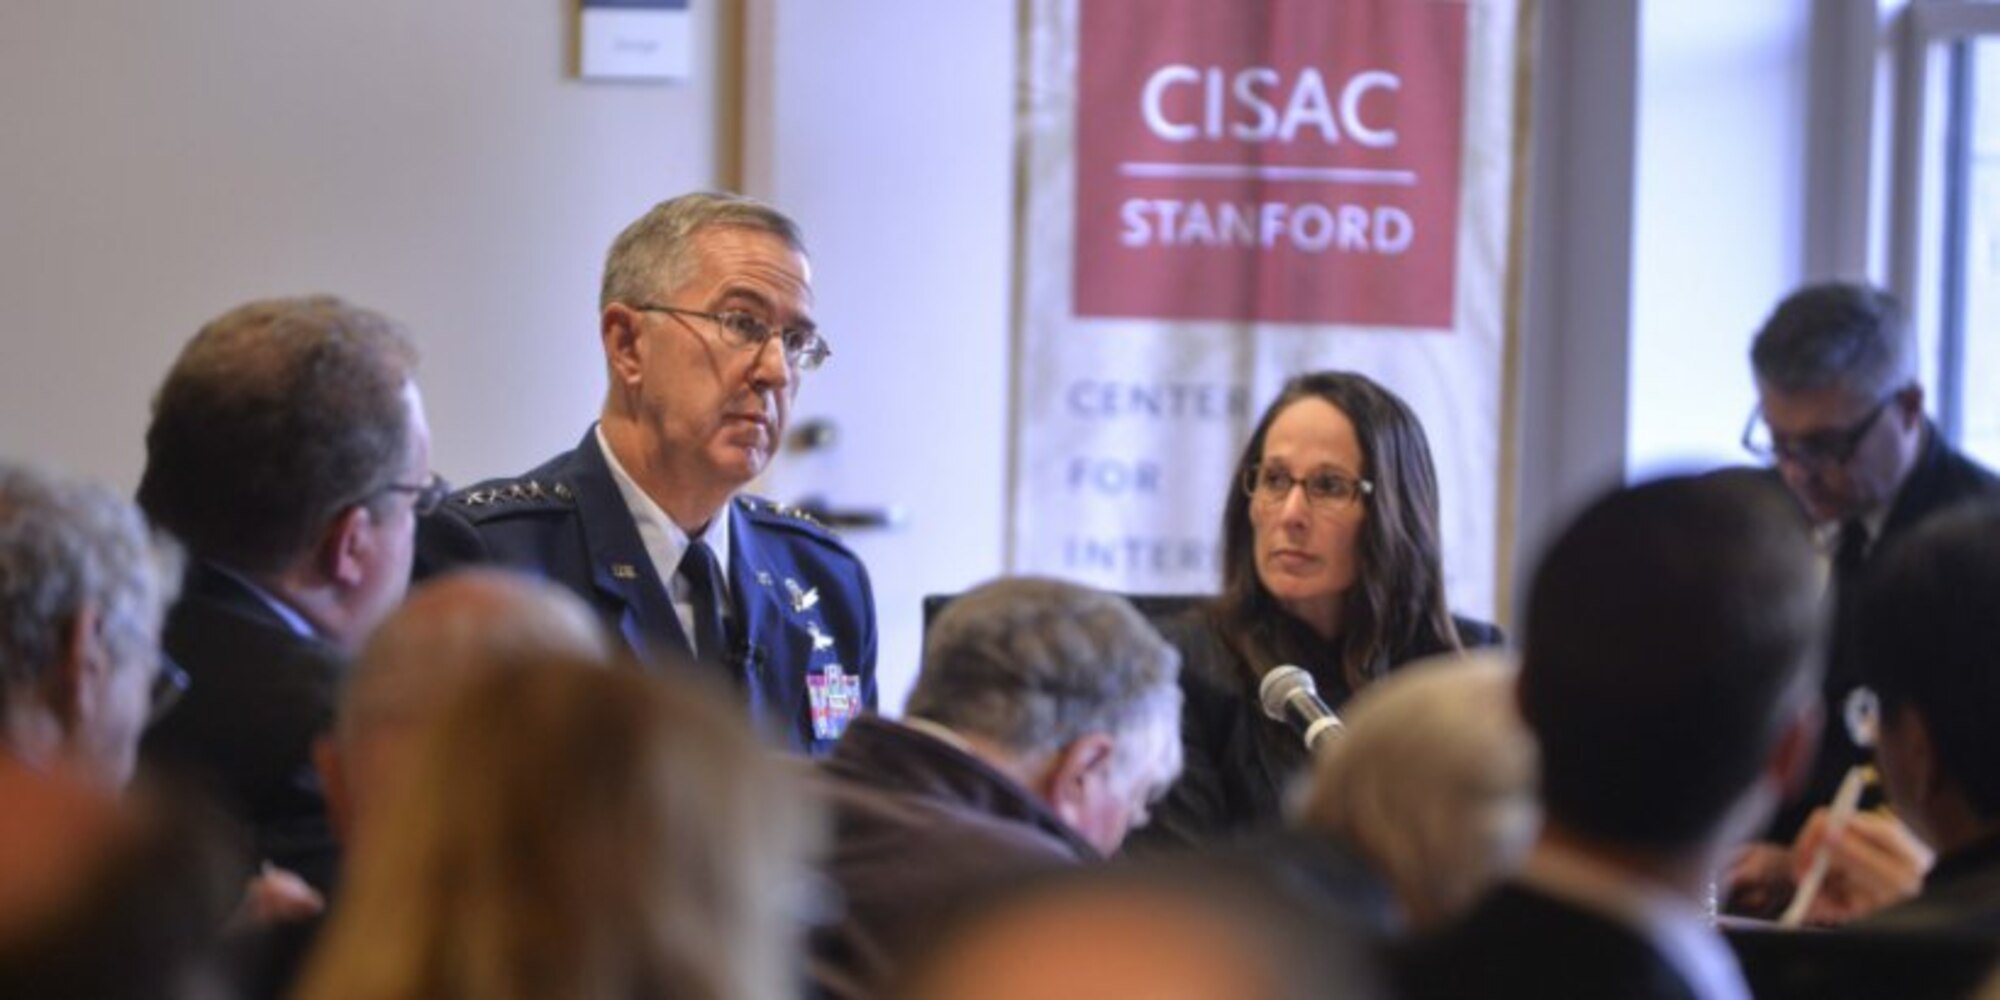 U.S. Strategic Command commander Gen. John Hyten, center, spoke Jan. 24 at Stanford University Center for International Security and Cooperation.